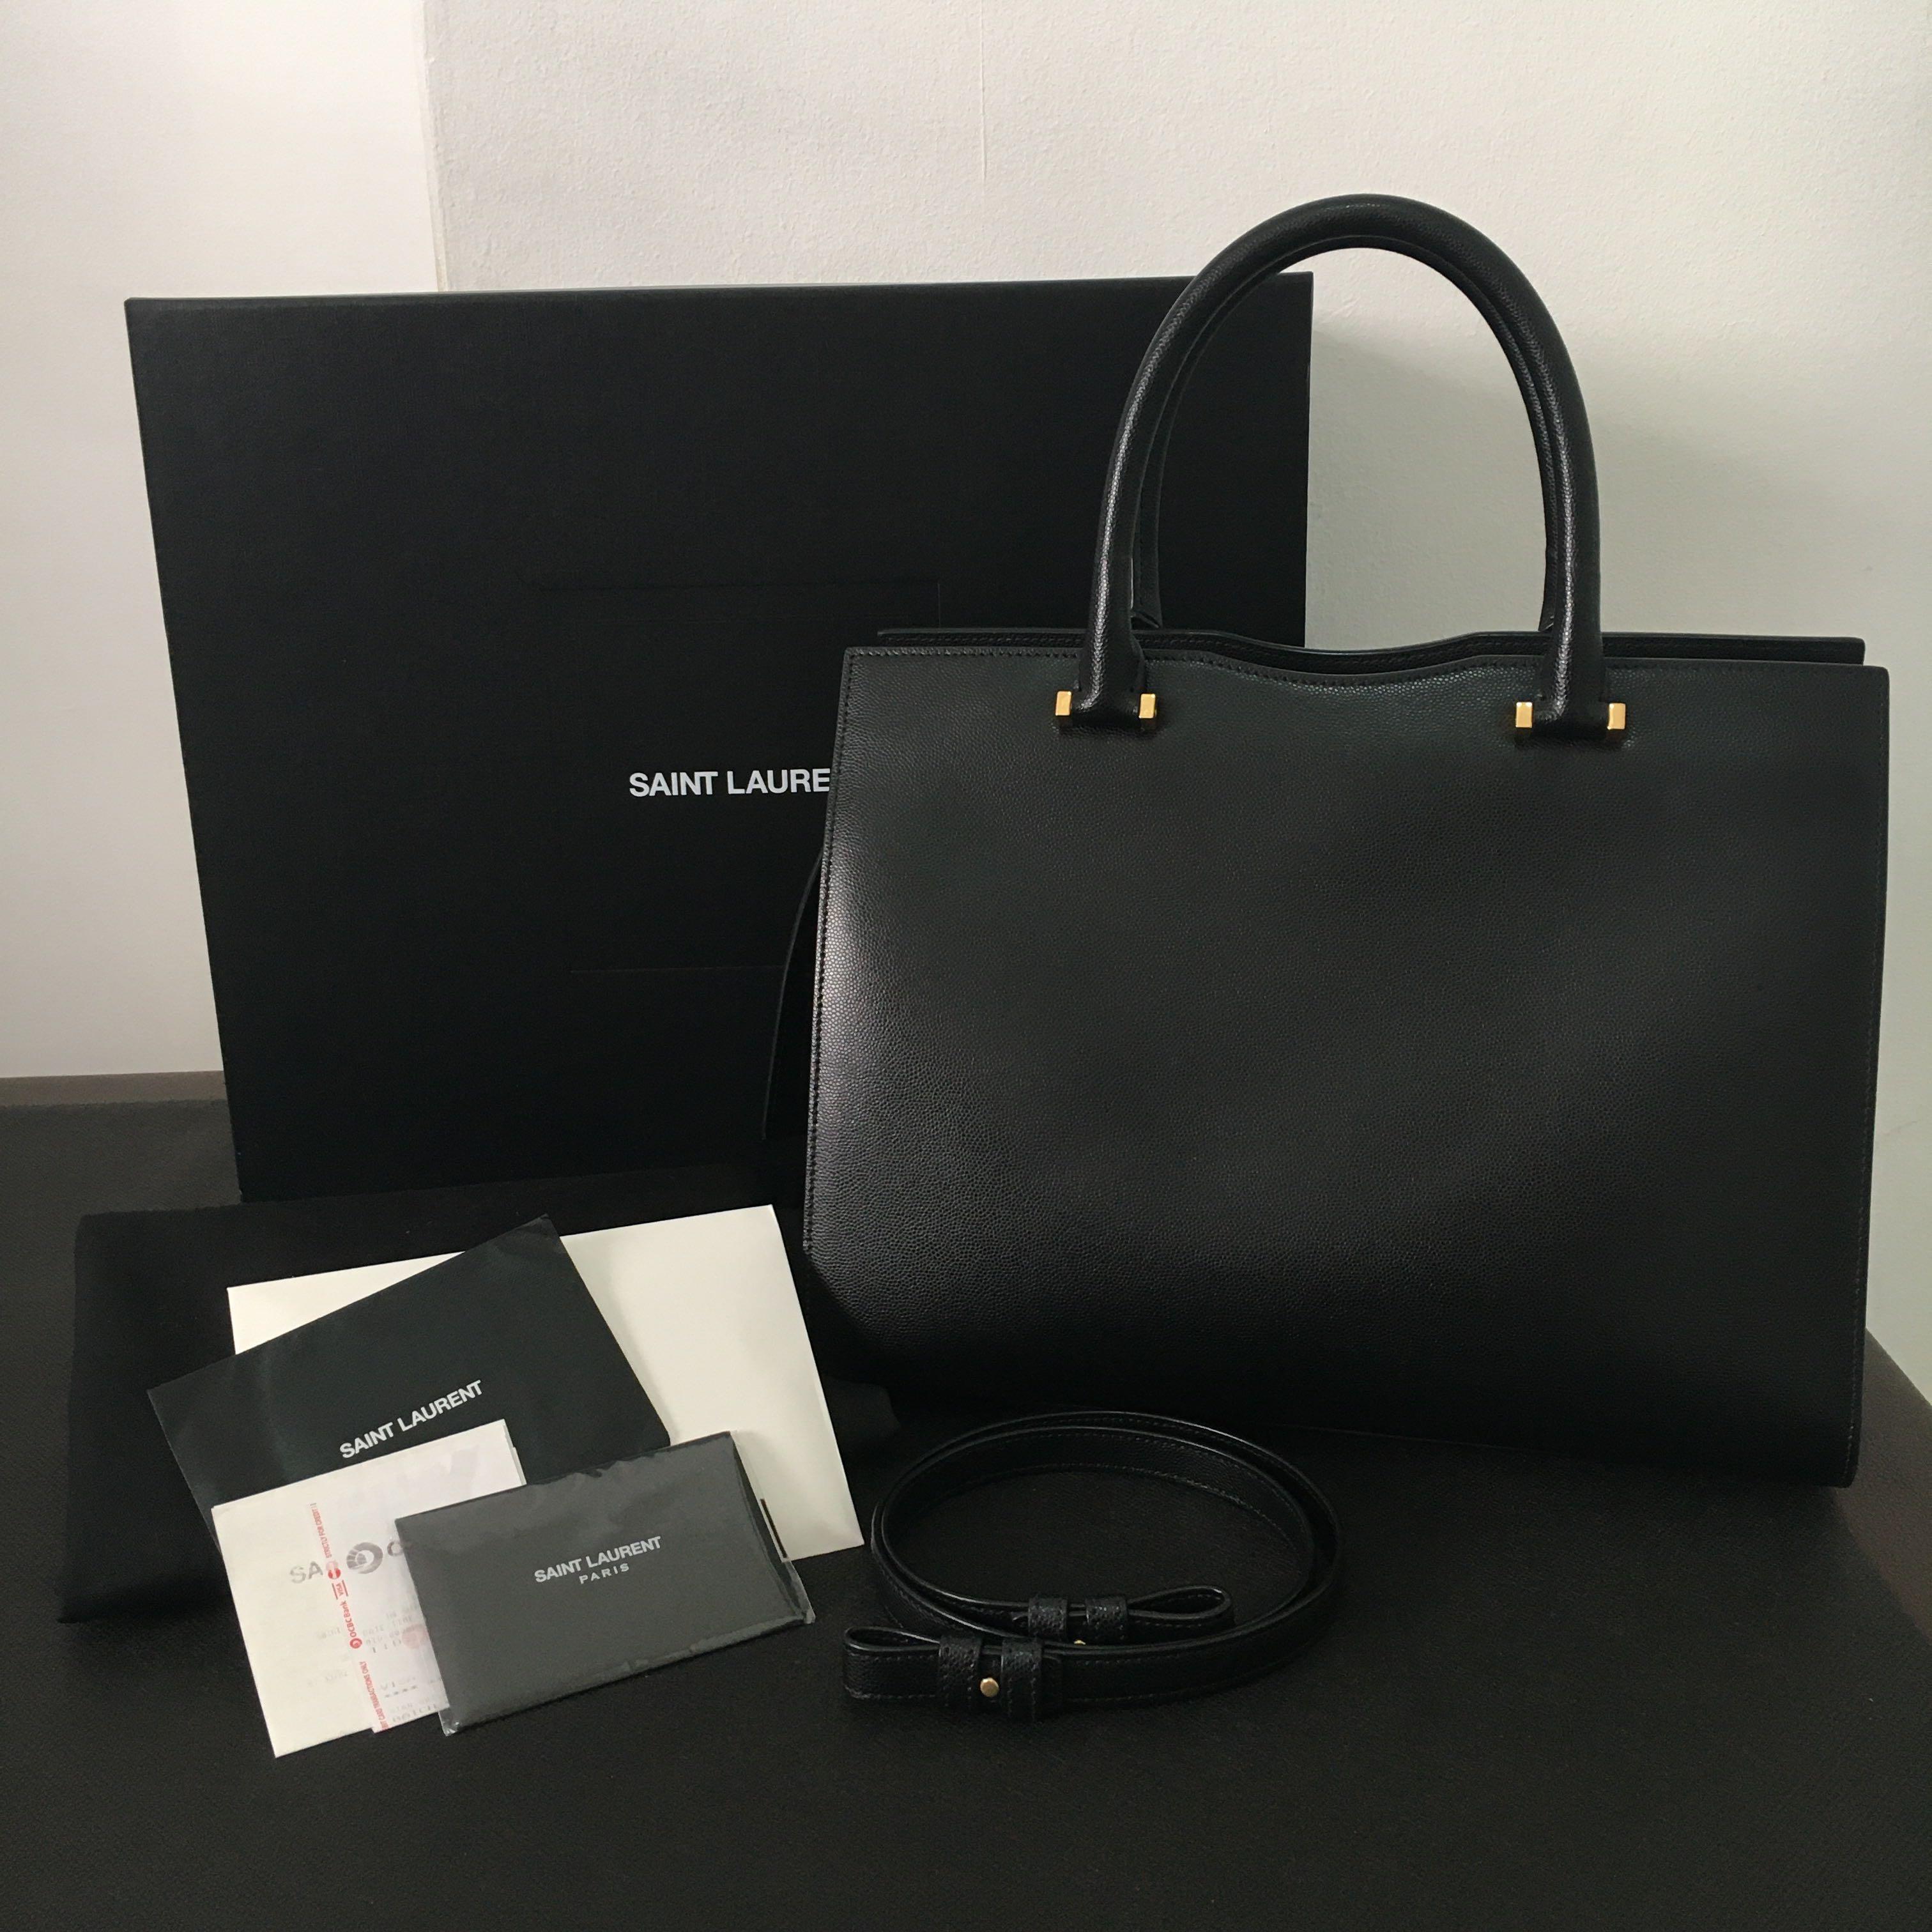 Saint Laurent bag uptown review Leather Satchel, Small, Medium